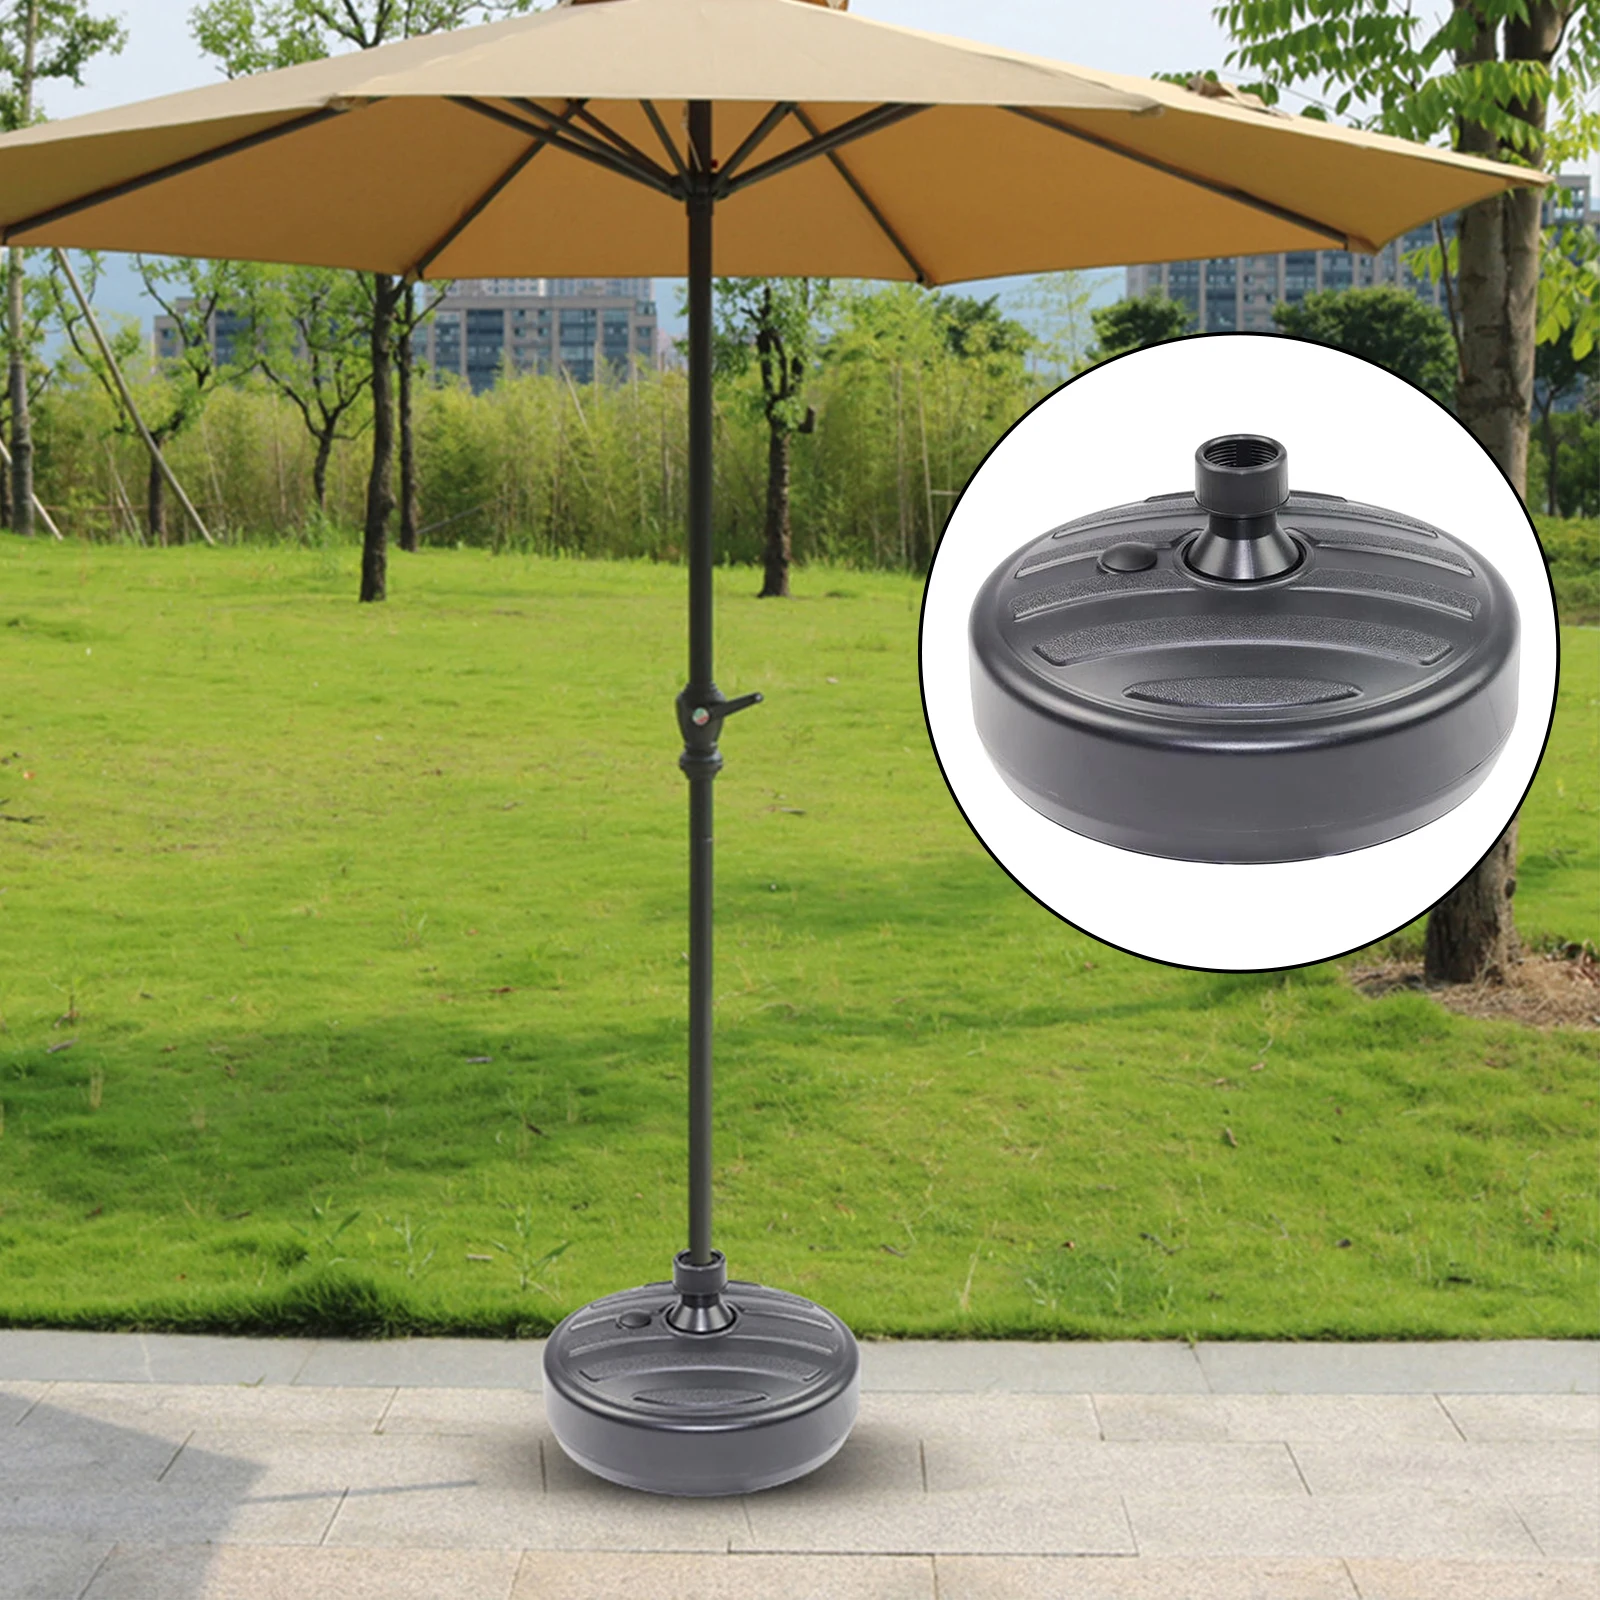 Parasol Base Plastic SunShade Base Sturdy Umbrella Stand For Home Garden Pool Outdoor Balcony Sun Shade